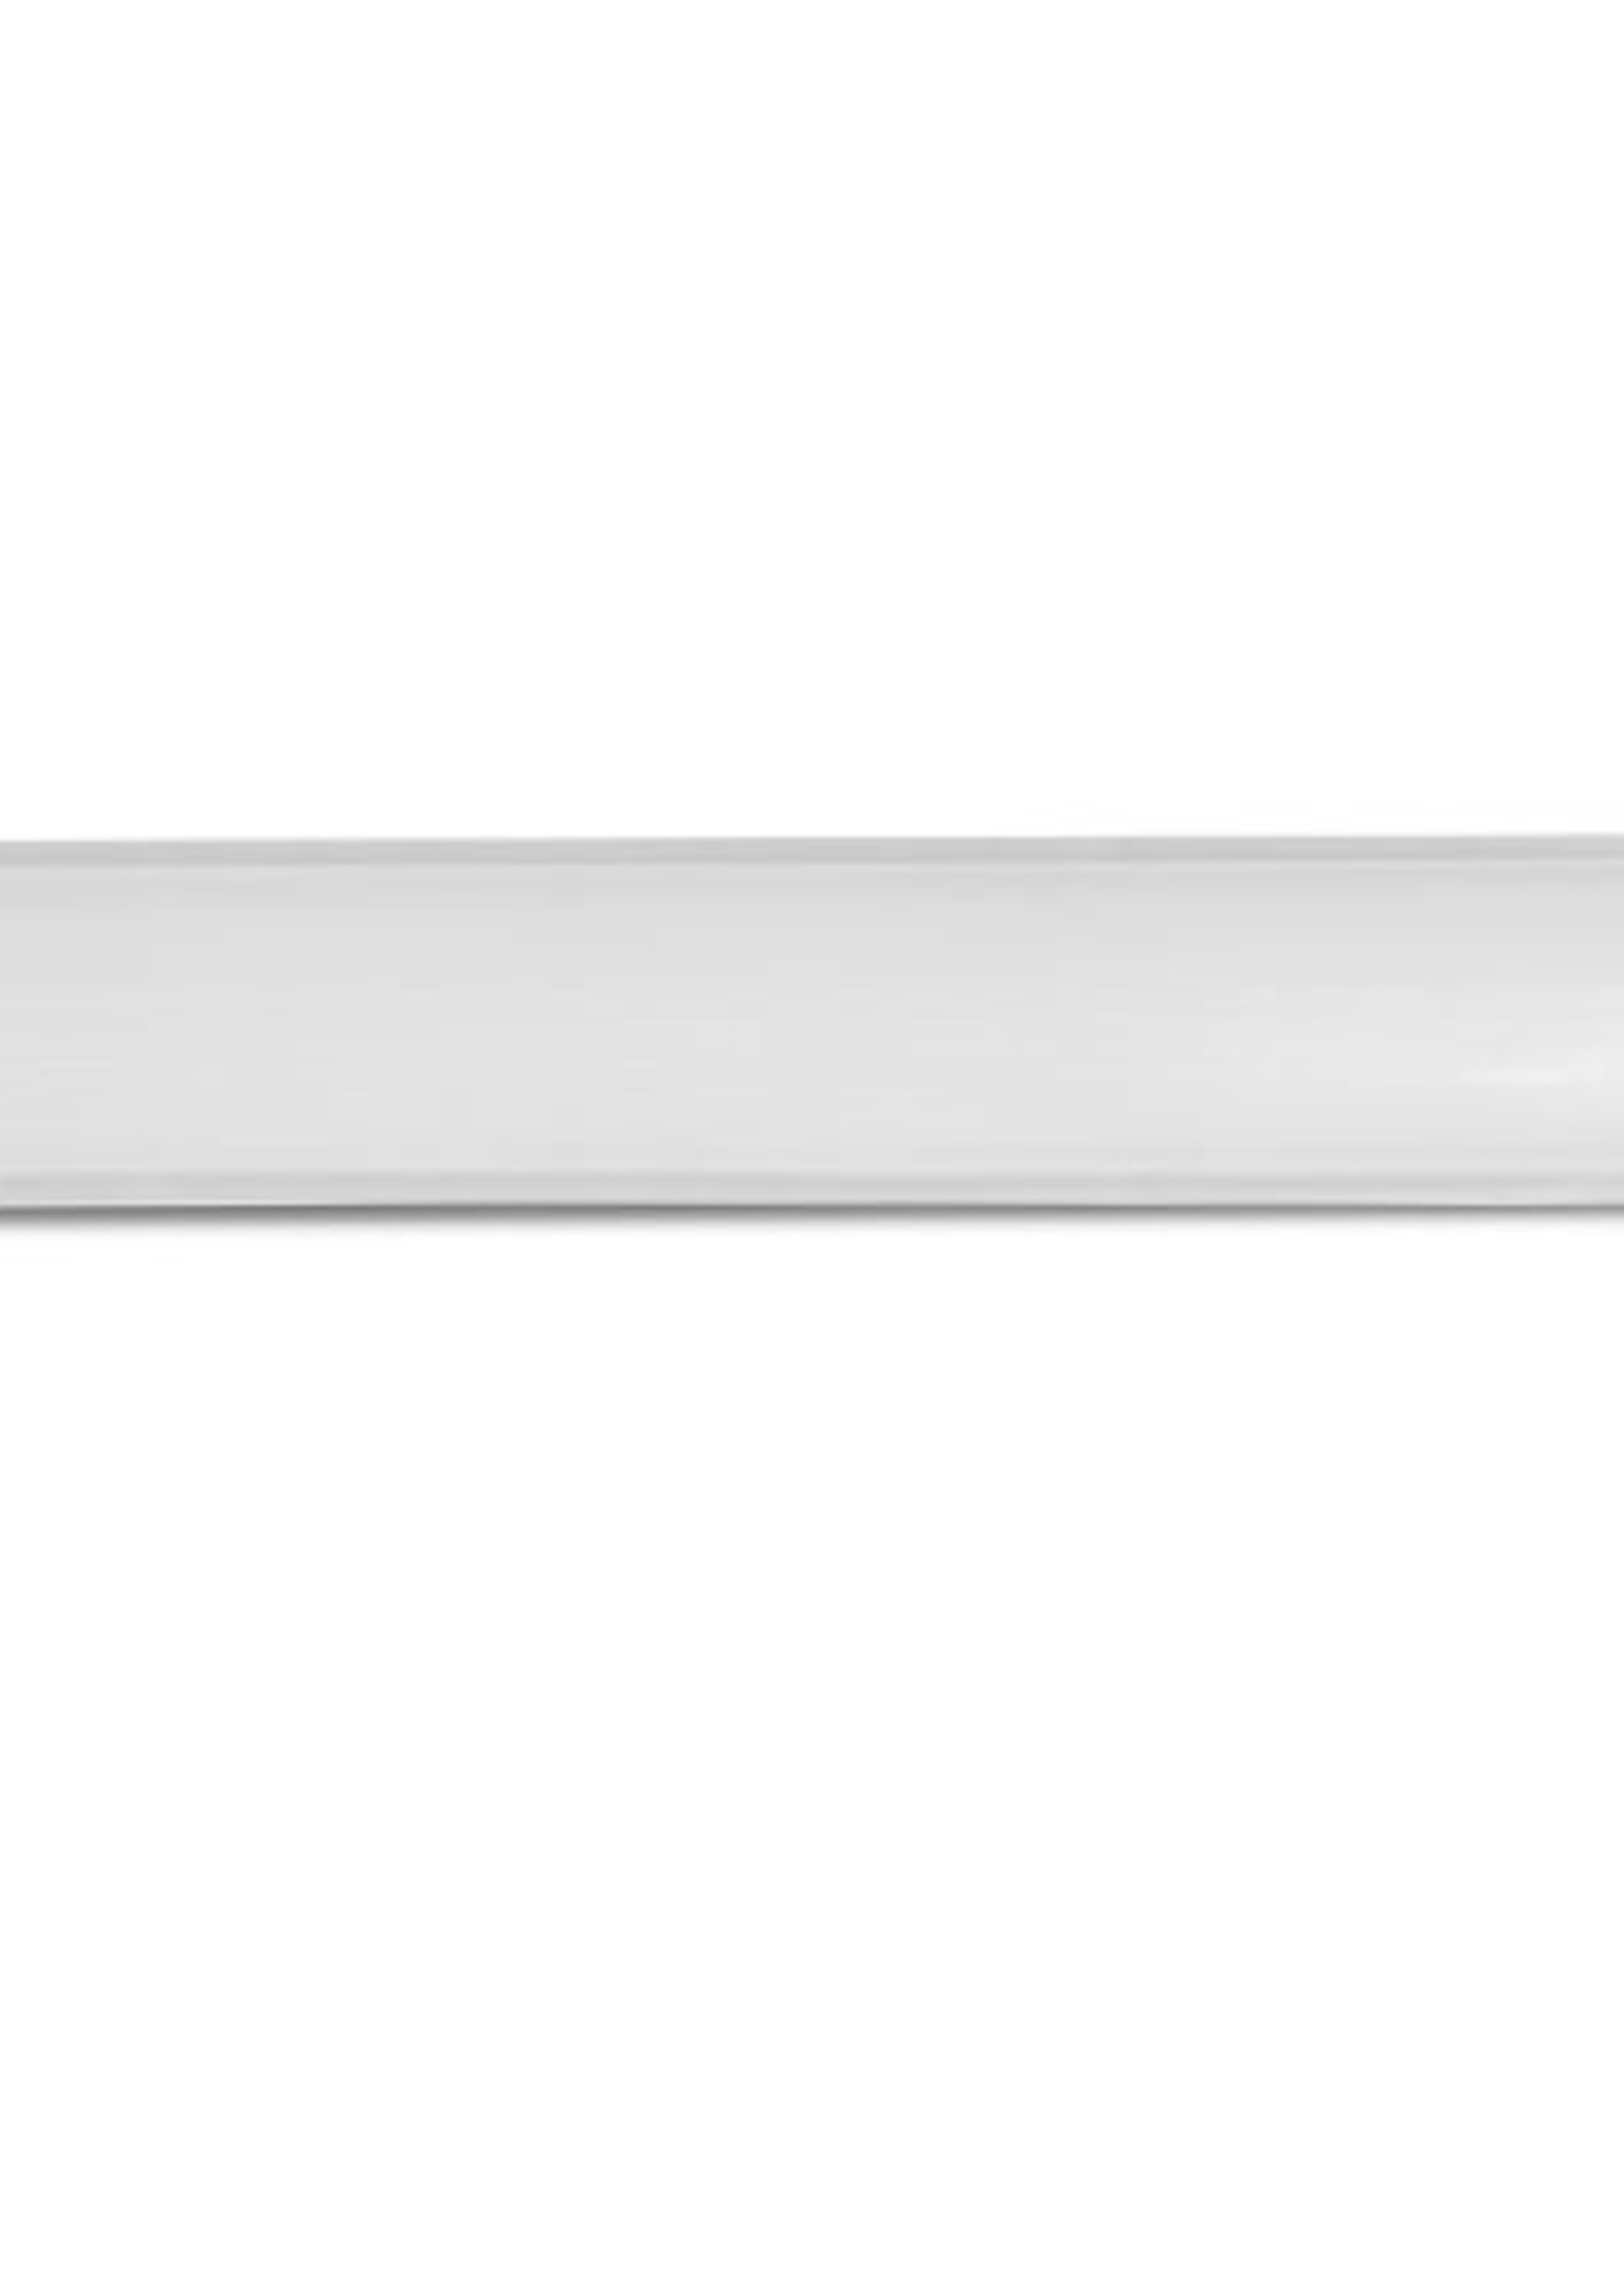 LEDWINKEL-Online LED Tri-Proof Light IP65 Water resistant 60cm 24W